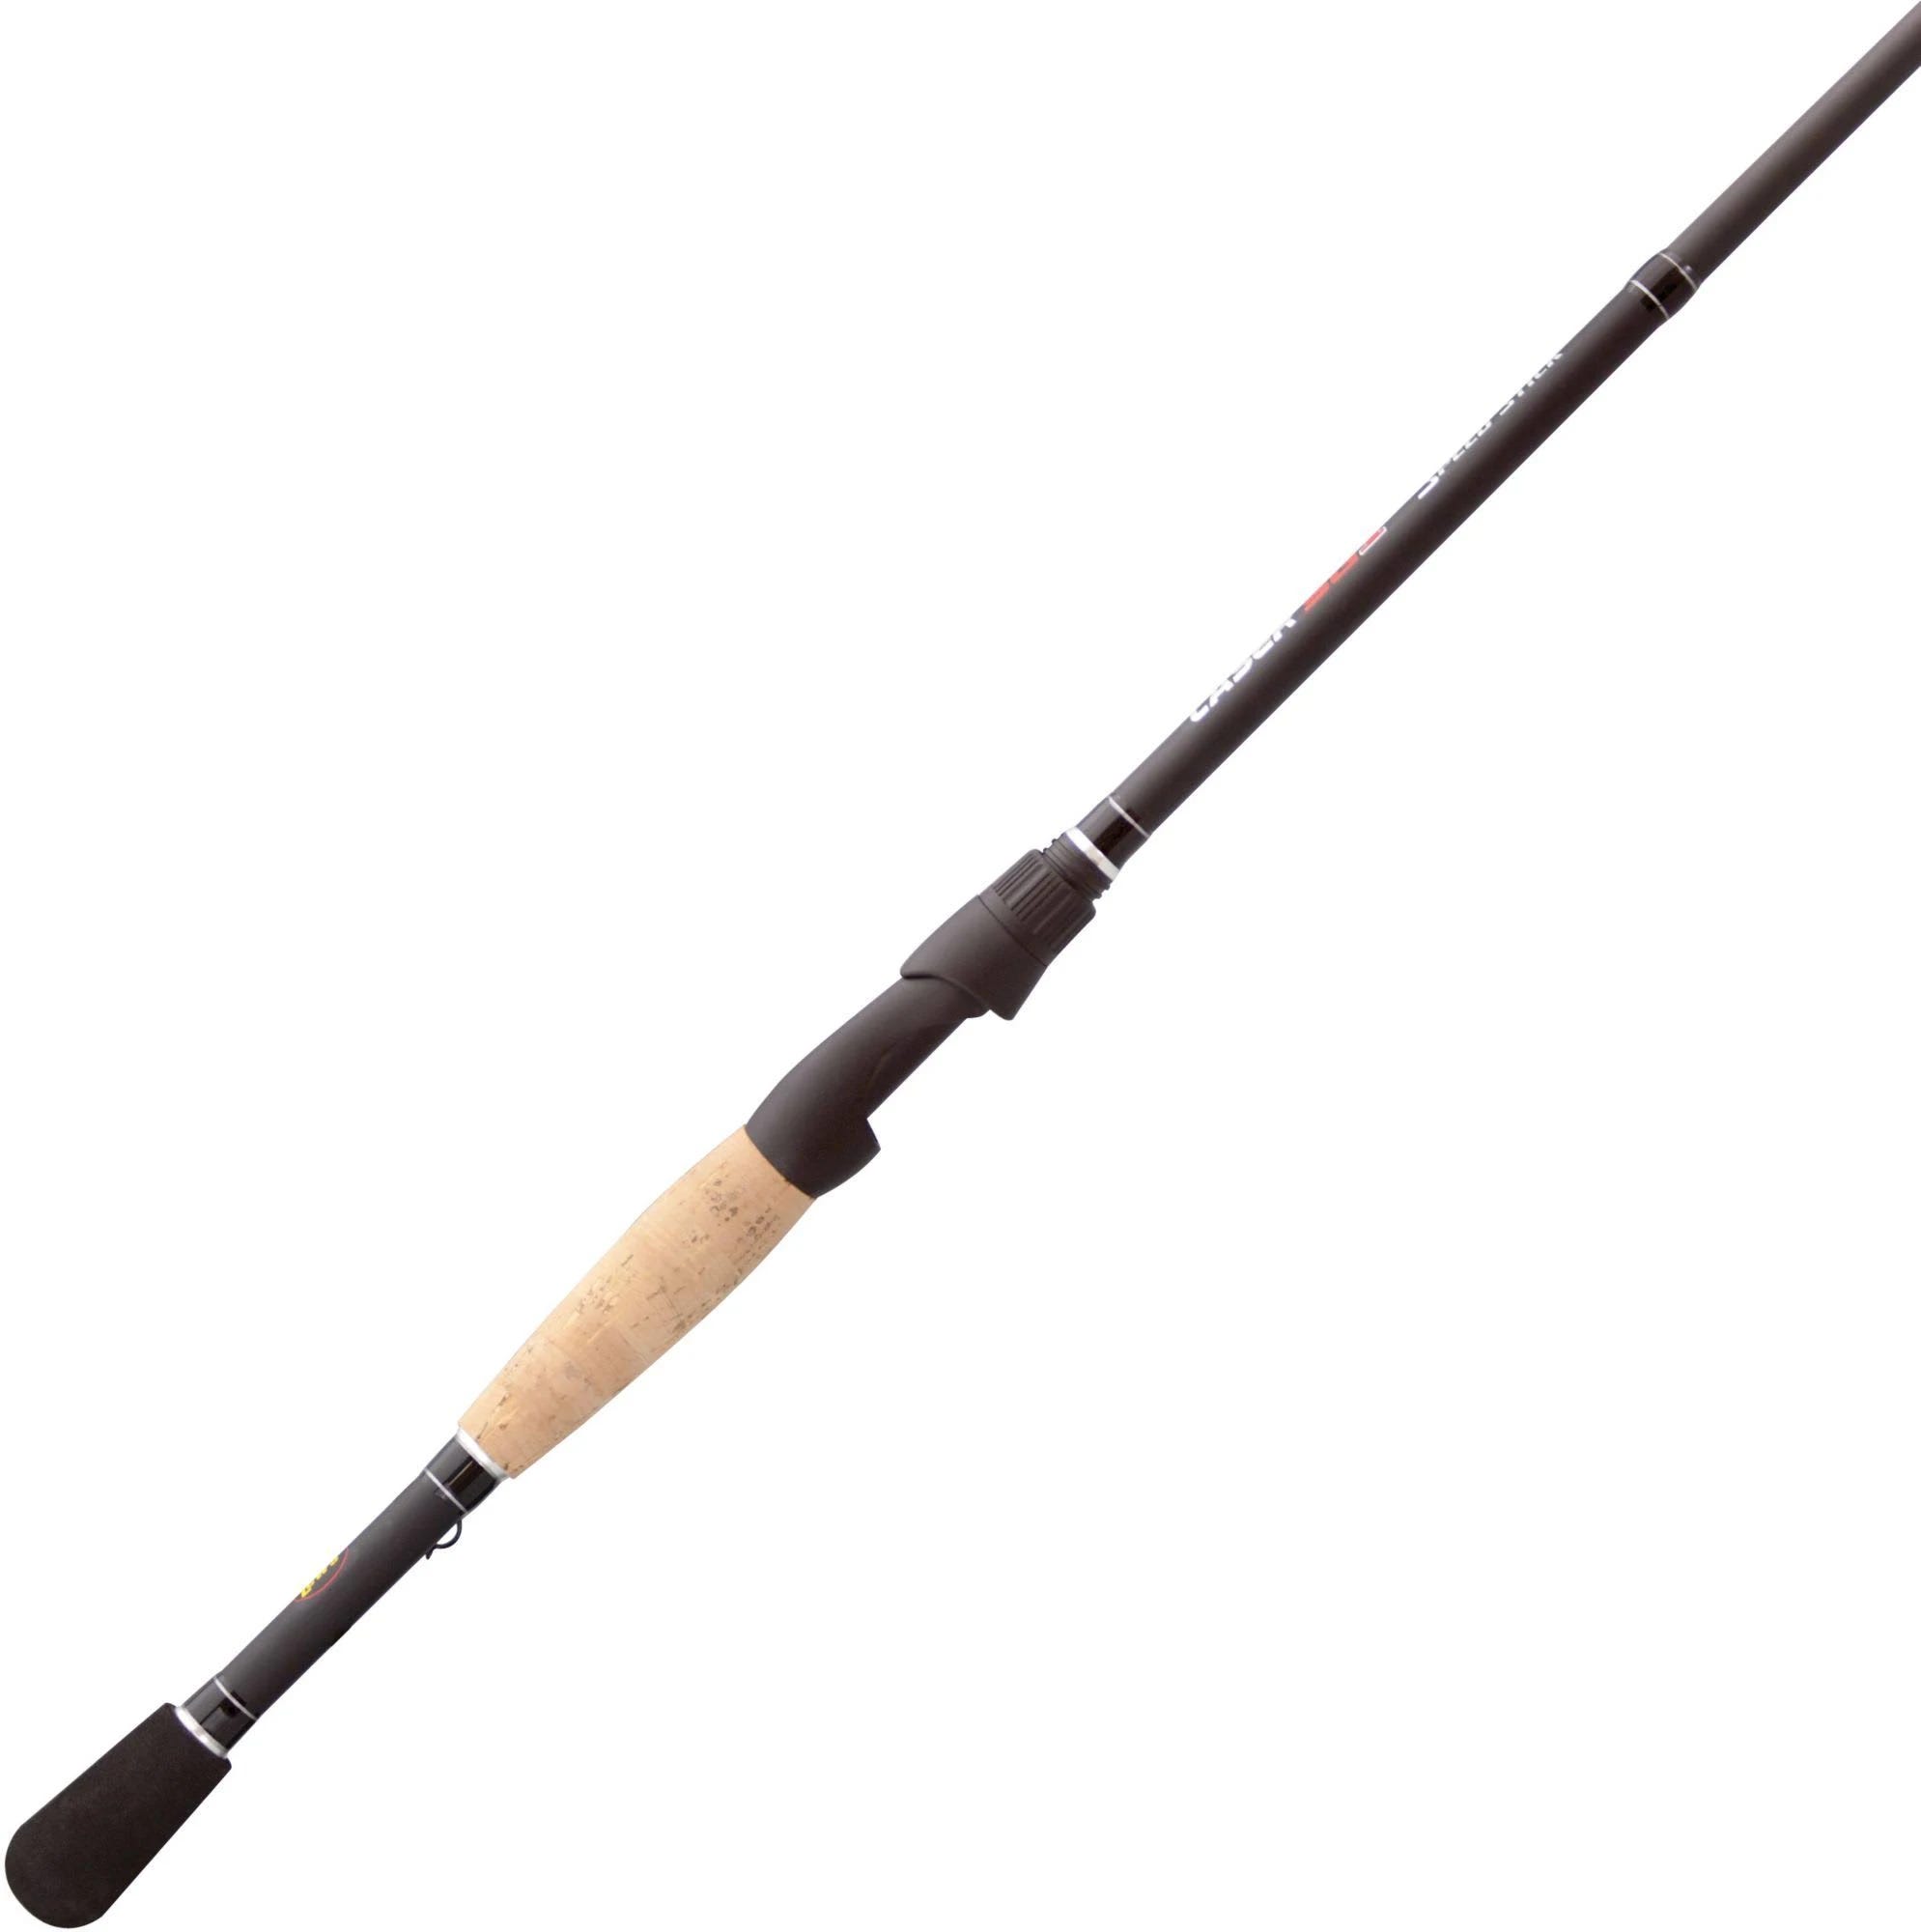 Lews Fishing Speed Graphite Multi-Function Spinning Rod | Image